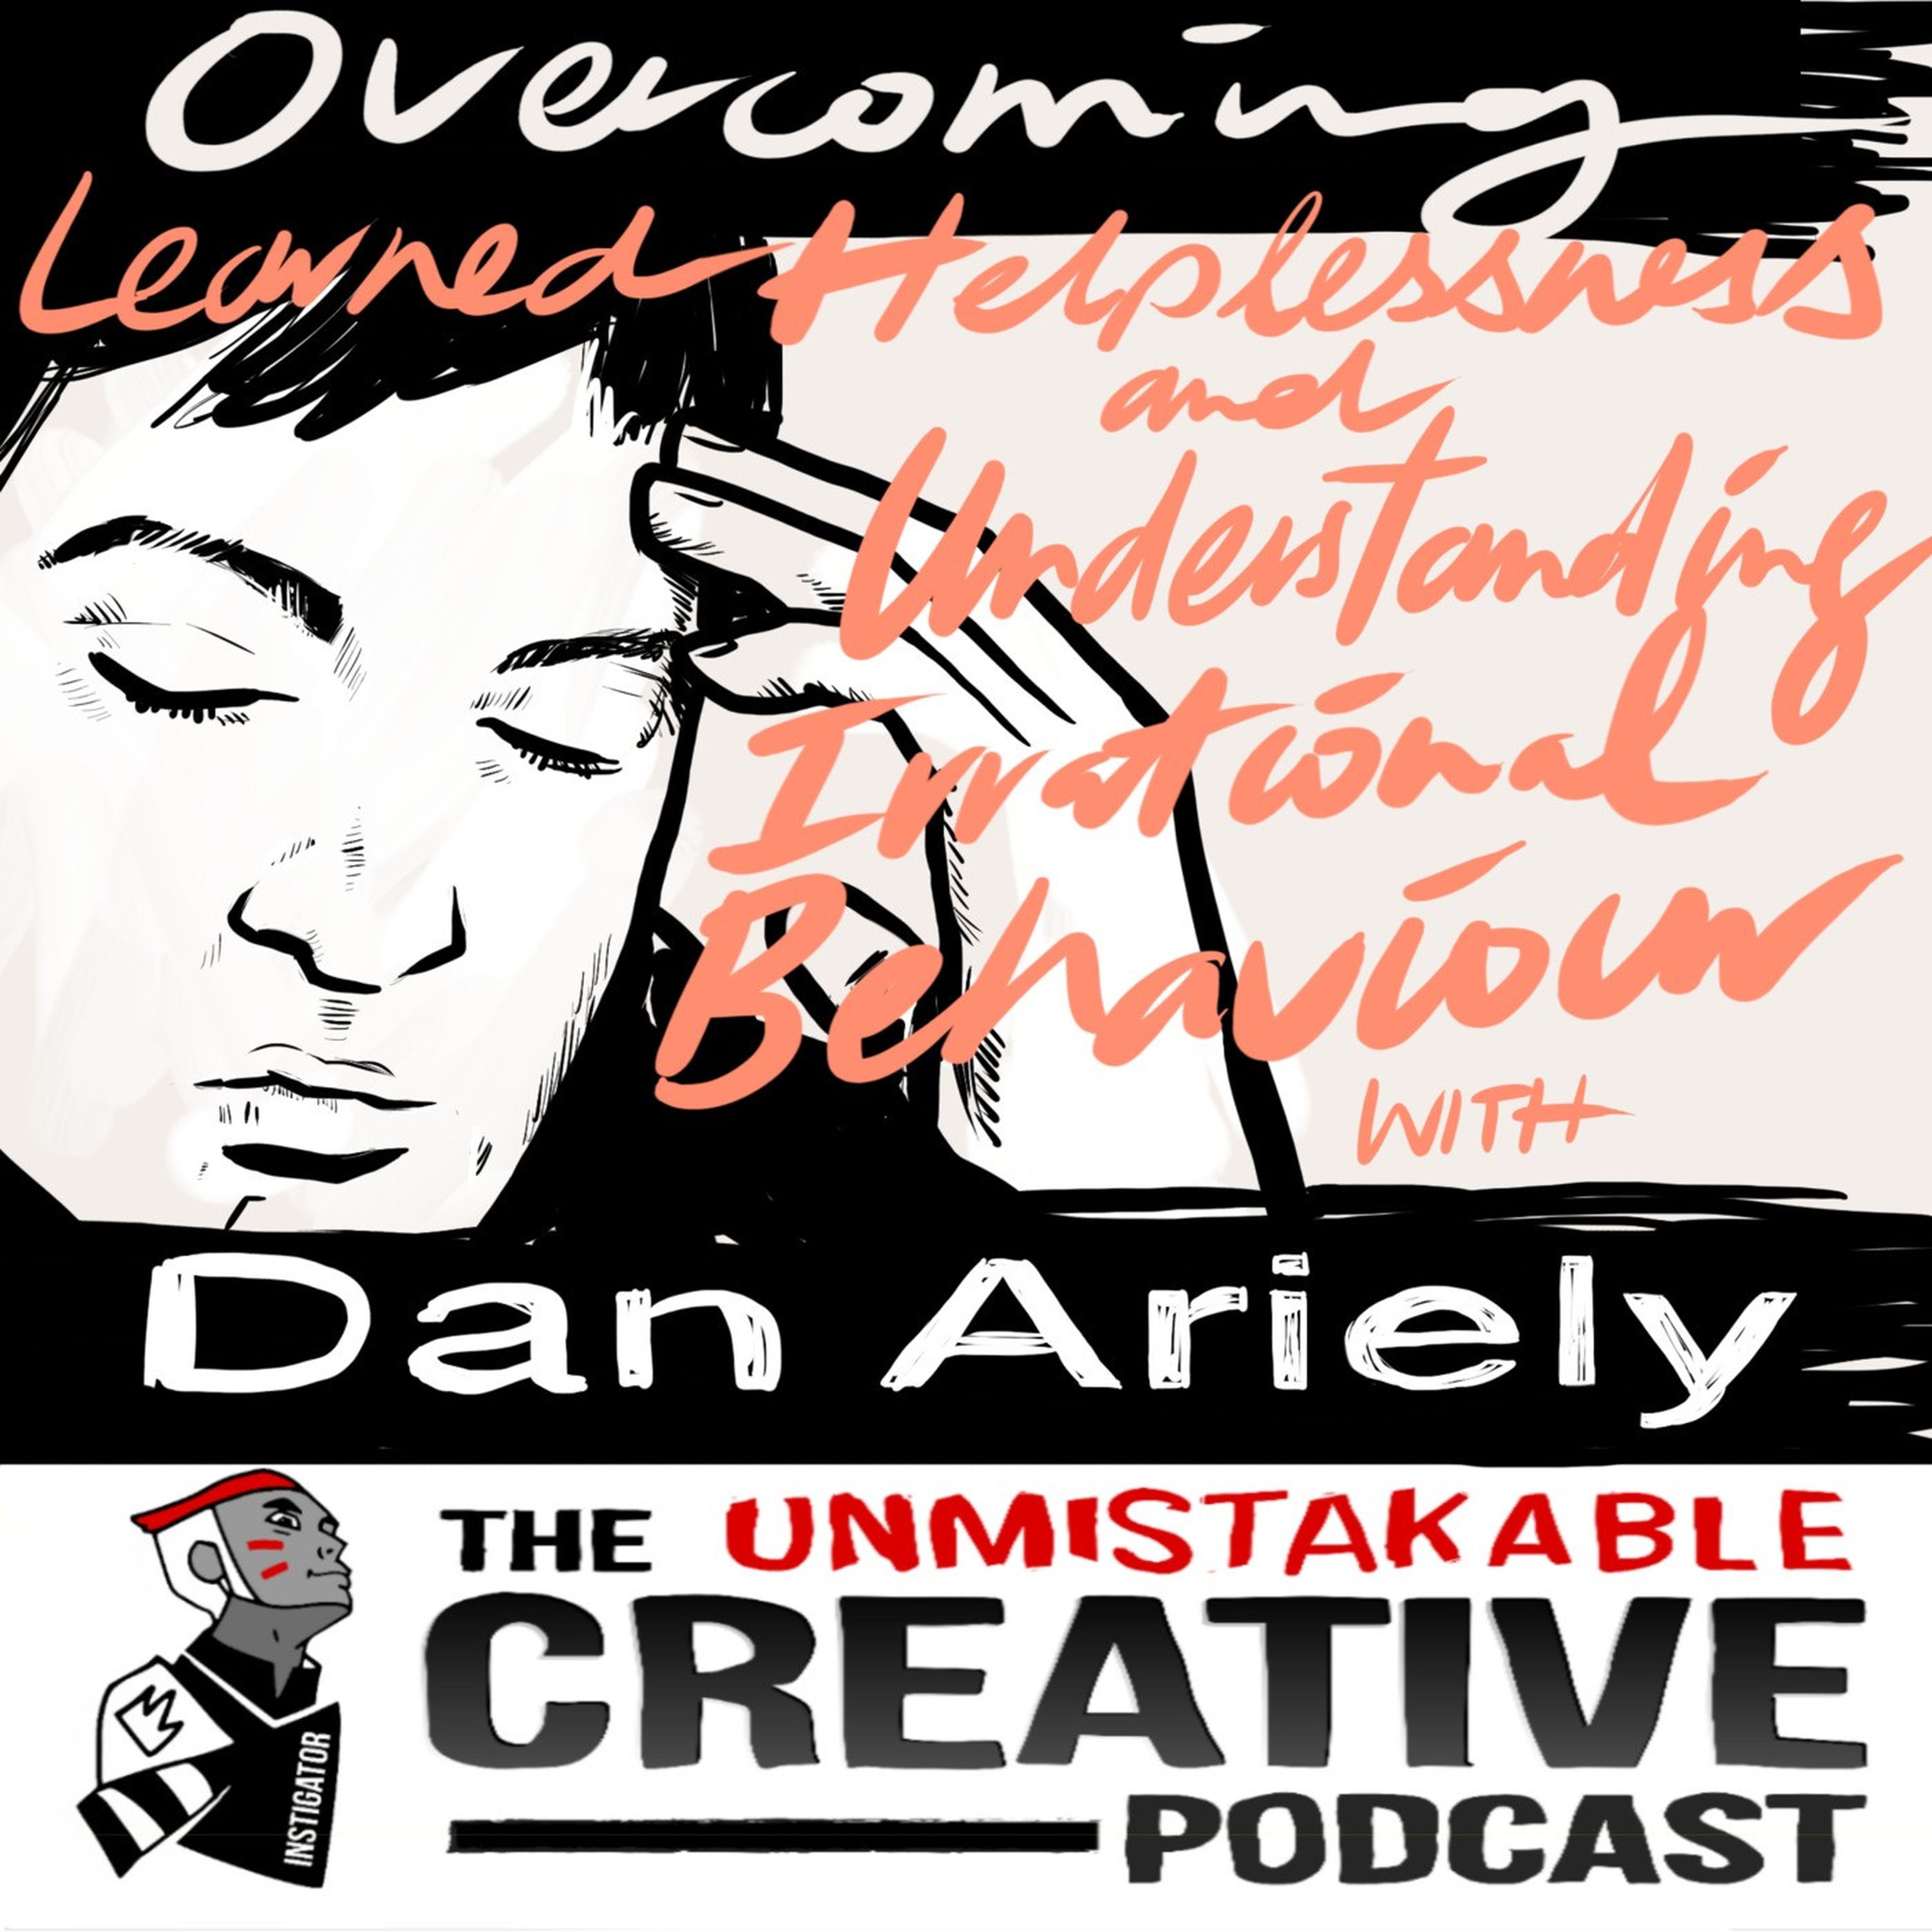 Listener Favorites: Dan Ariely | Overcoming Learned Helplessness and Understanding Irrational Behavior